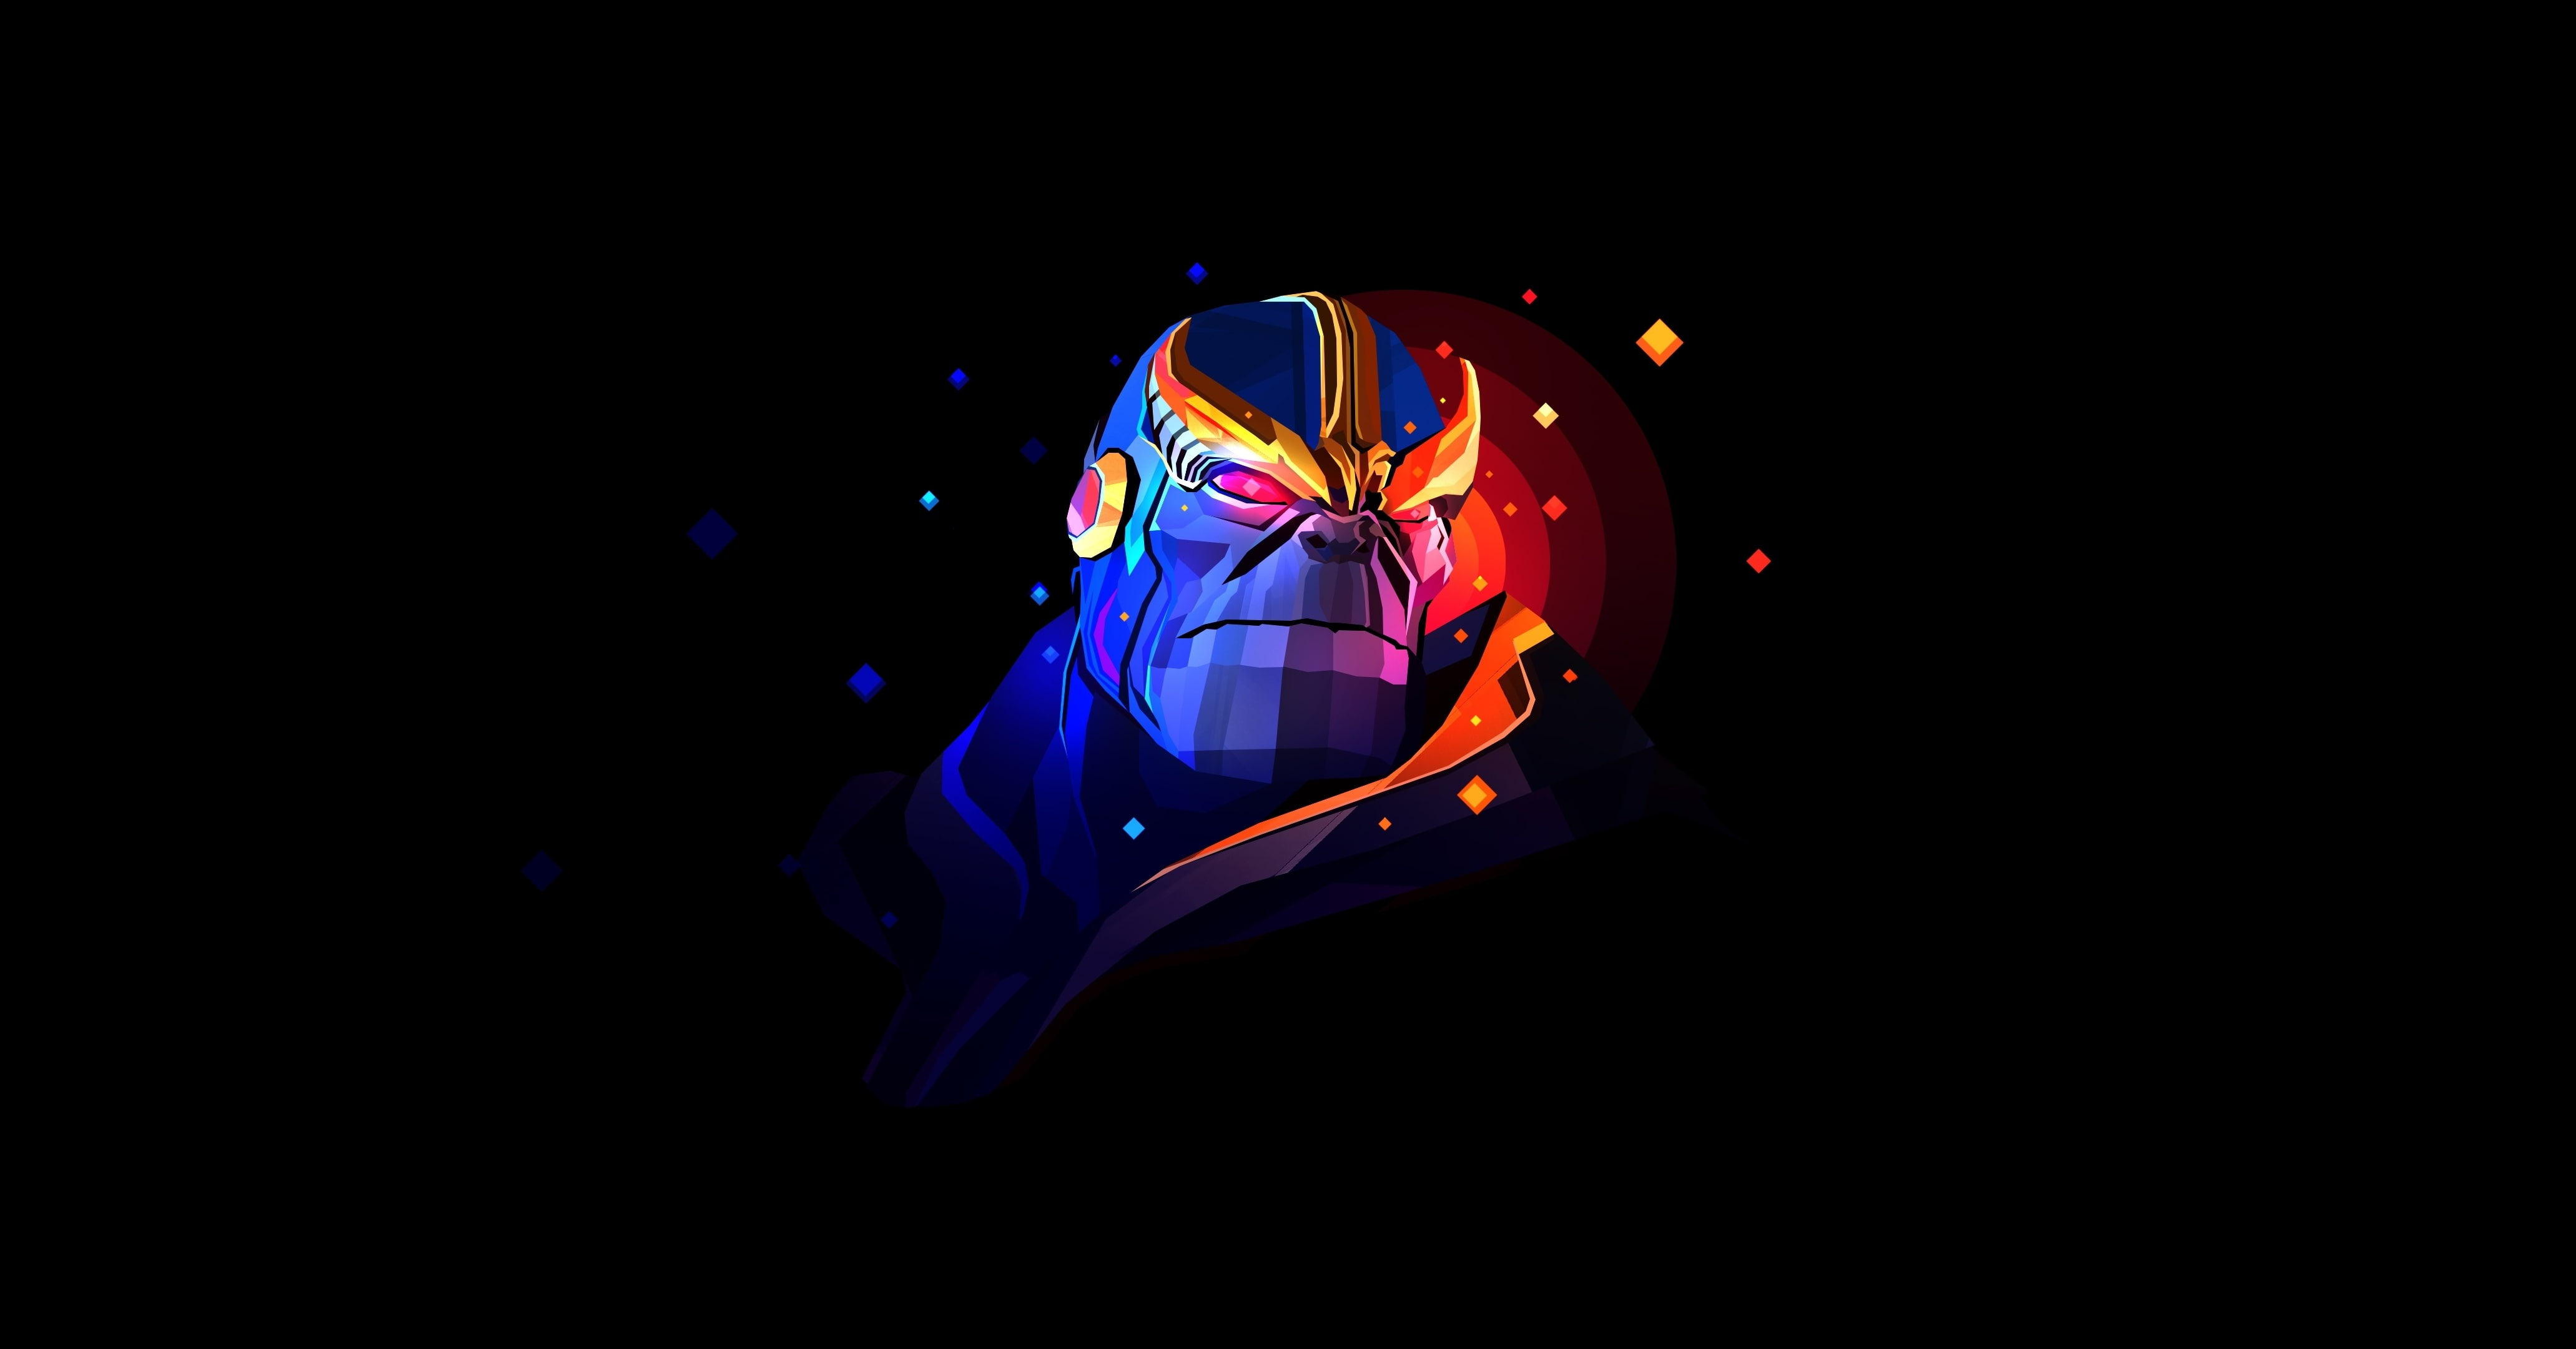 Thanos, Avengers Infinity War, villain, digital art, illustration